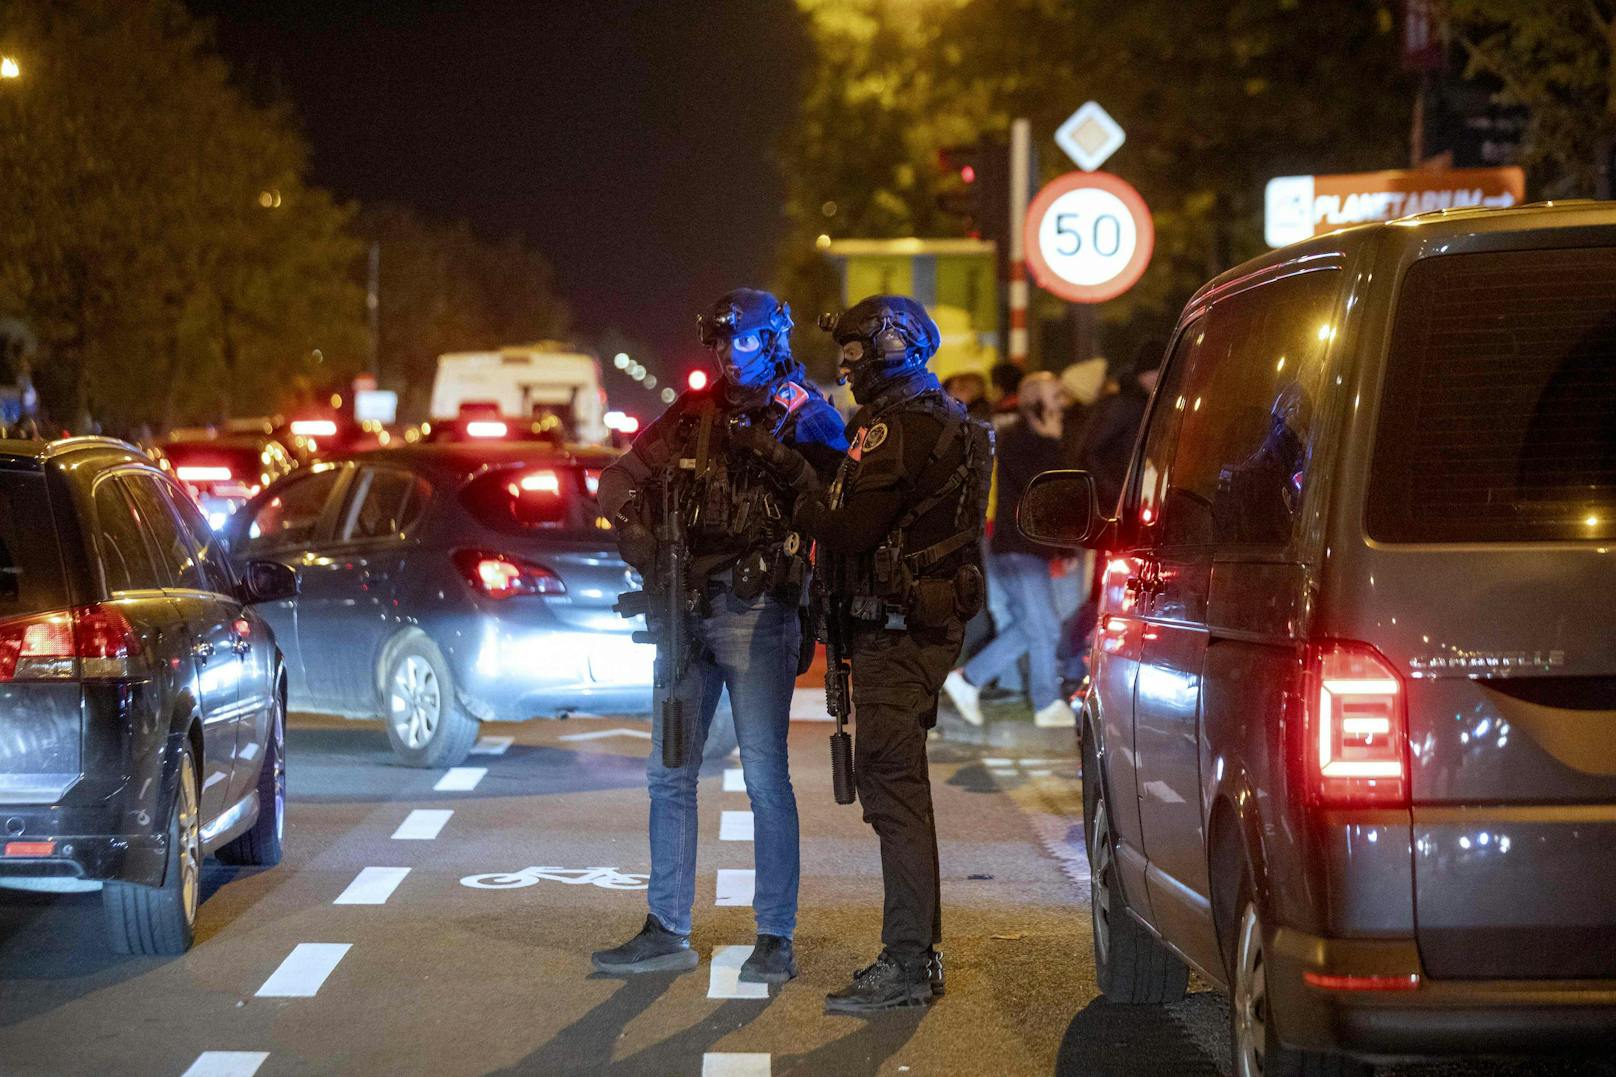 Polizei erschießt den Brüssel-Attentäter (45)